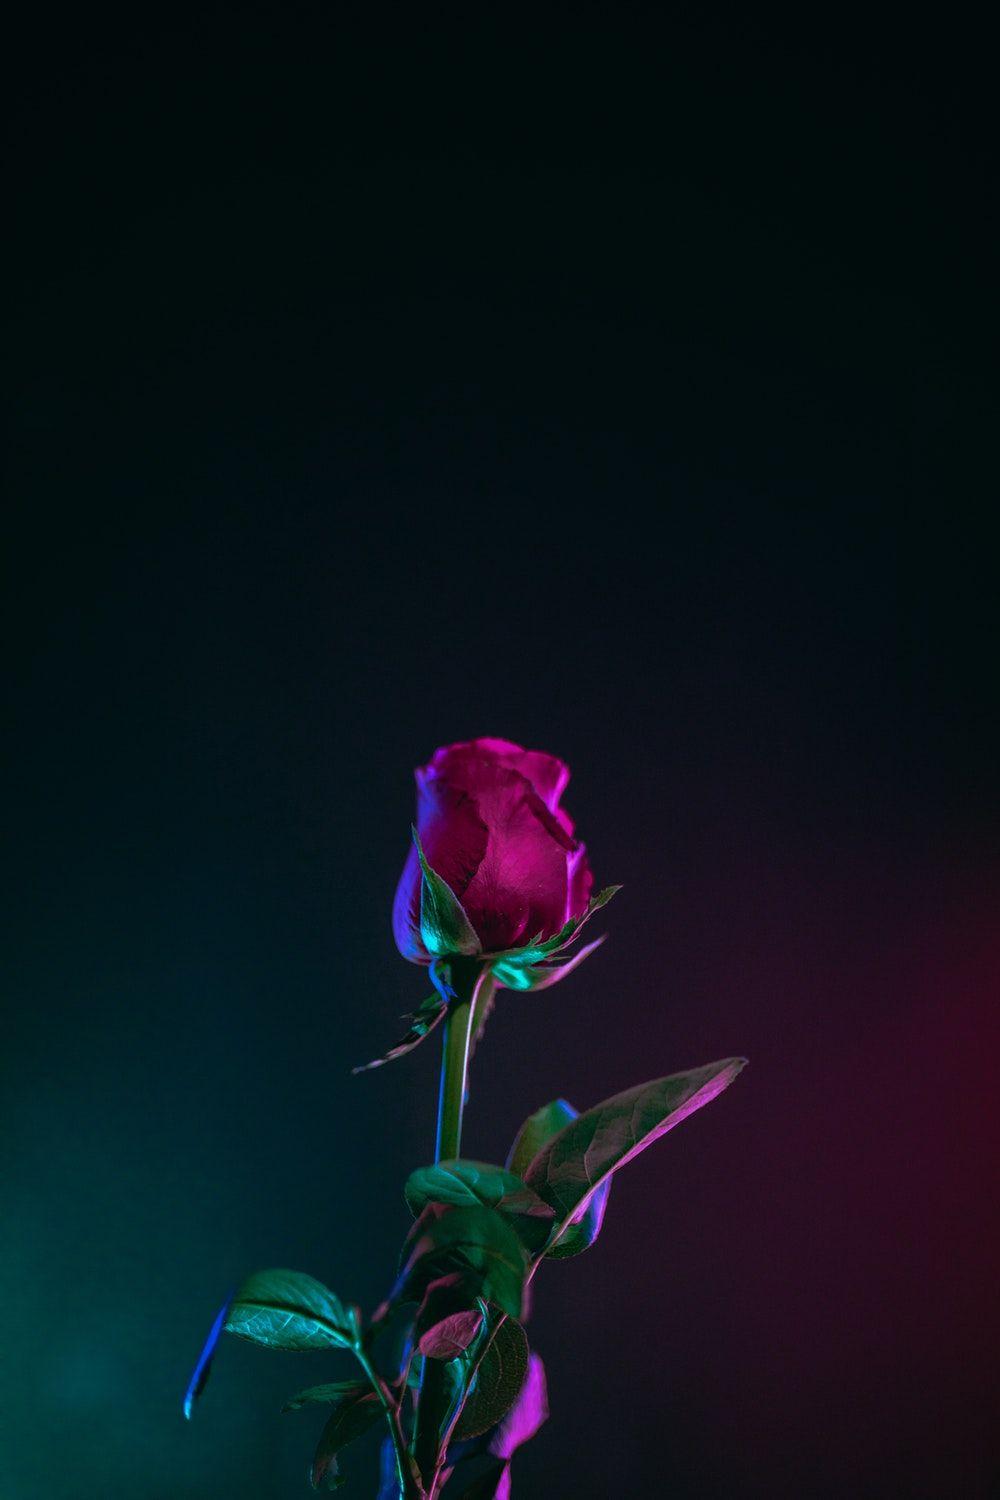 A single rose in front of black background - Roses, black rose